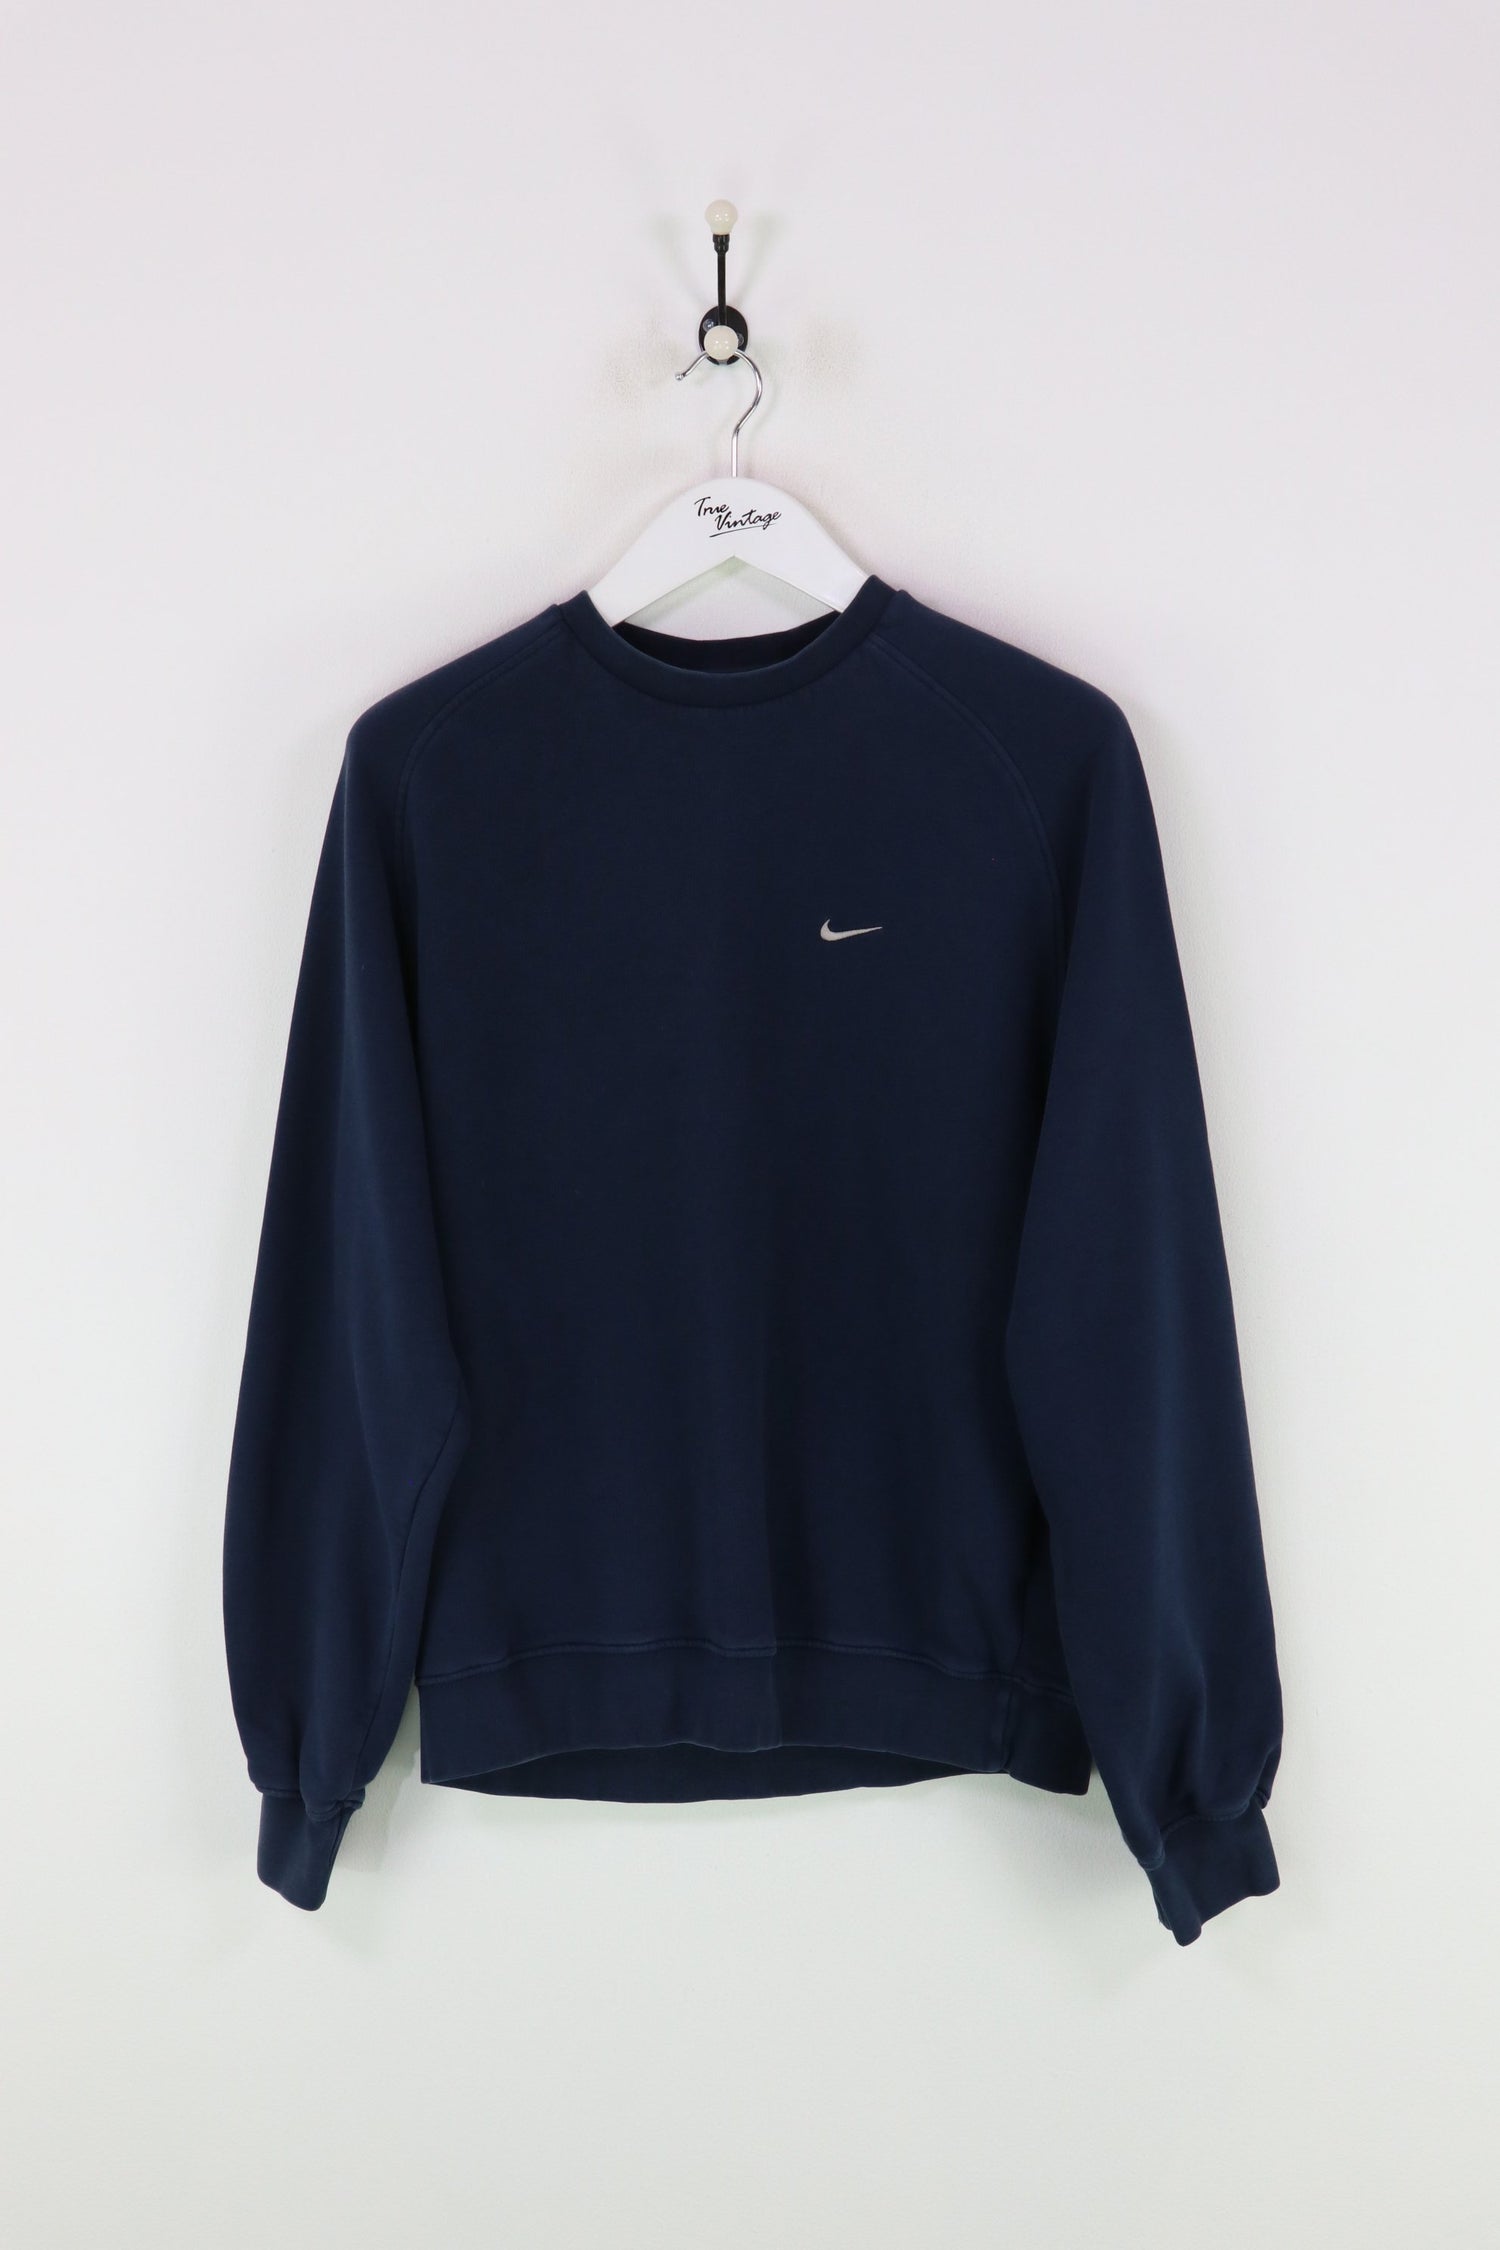 Nike Sweatshirt Navy Large